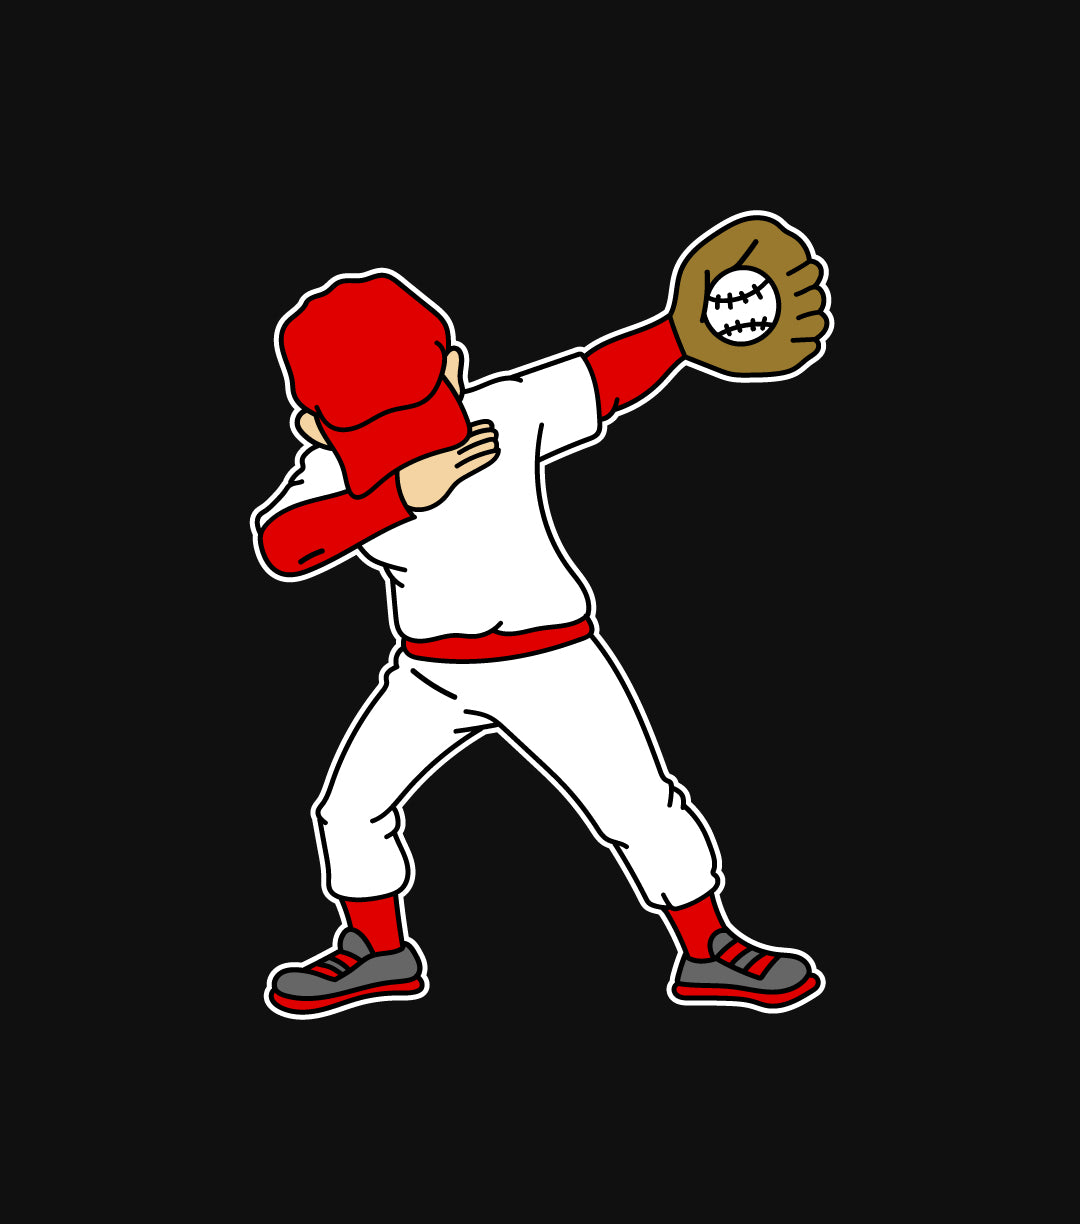 Dabbing Baseball Player T-Shirt